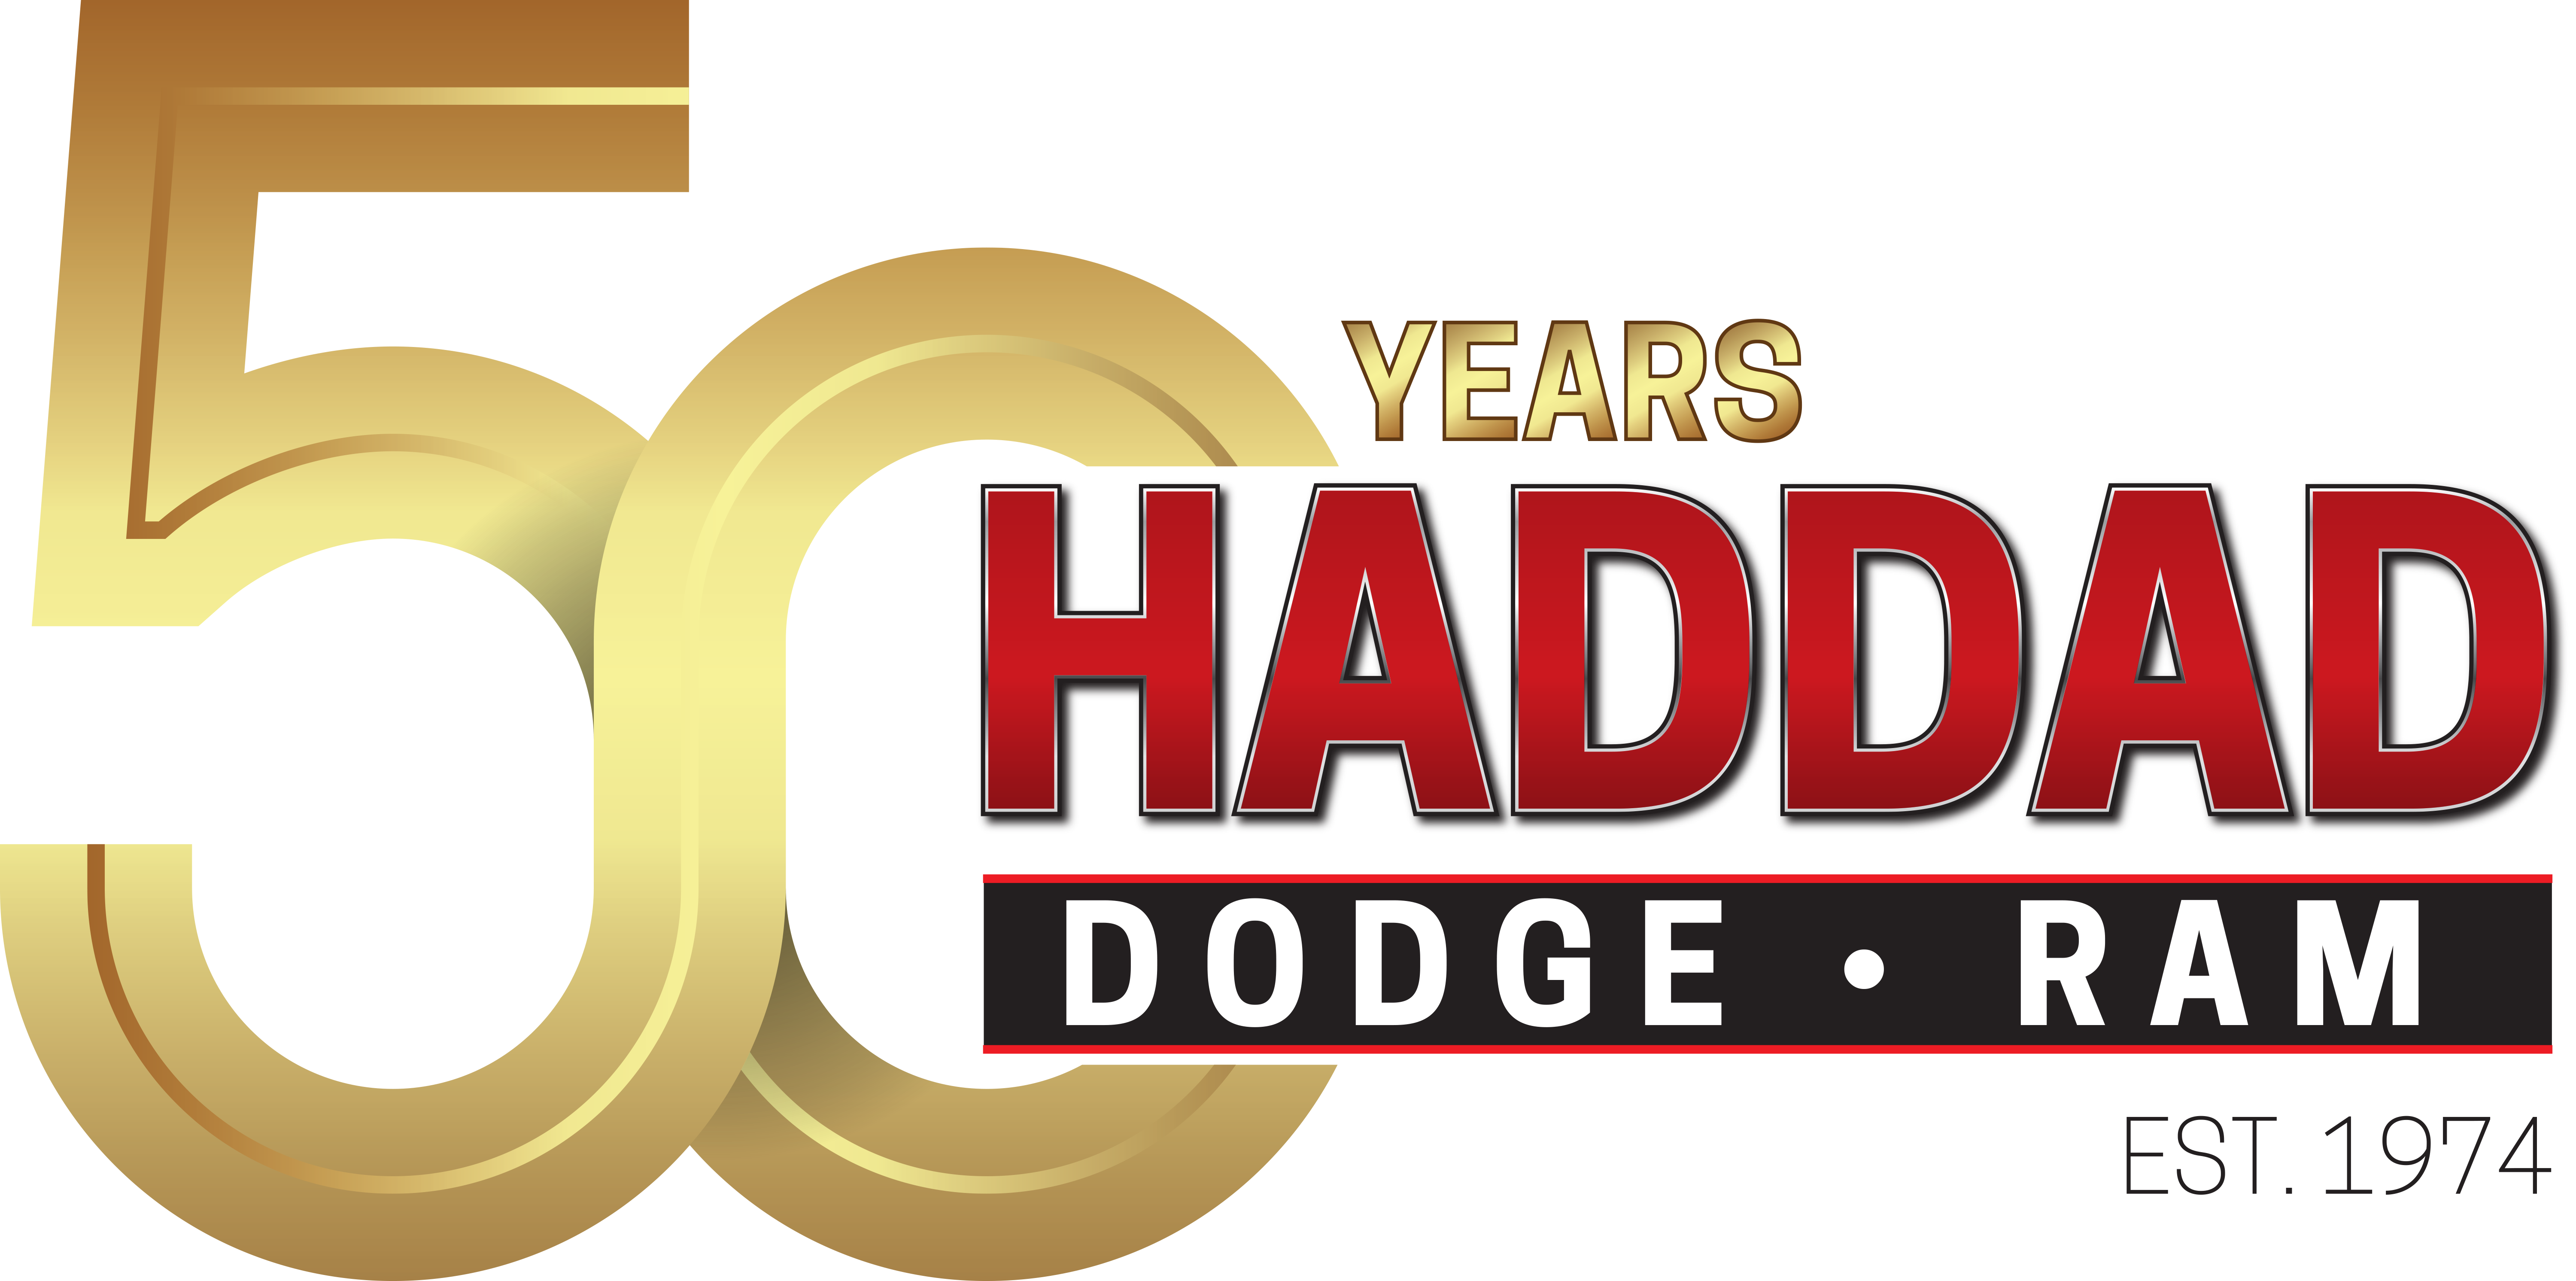 Haddad Dodge Ram 50th Anniversary Logo-1